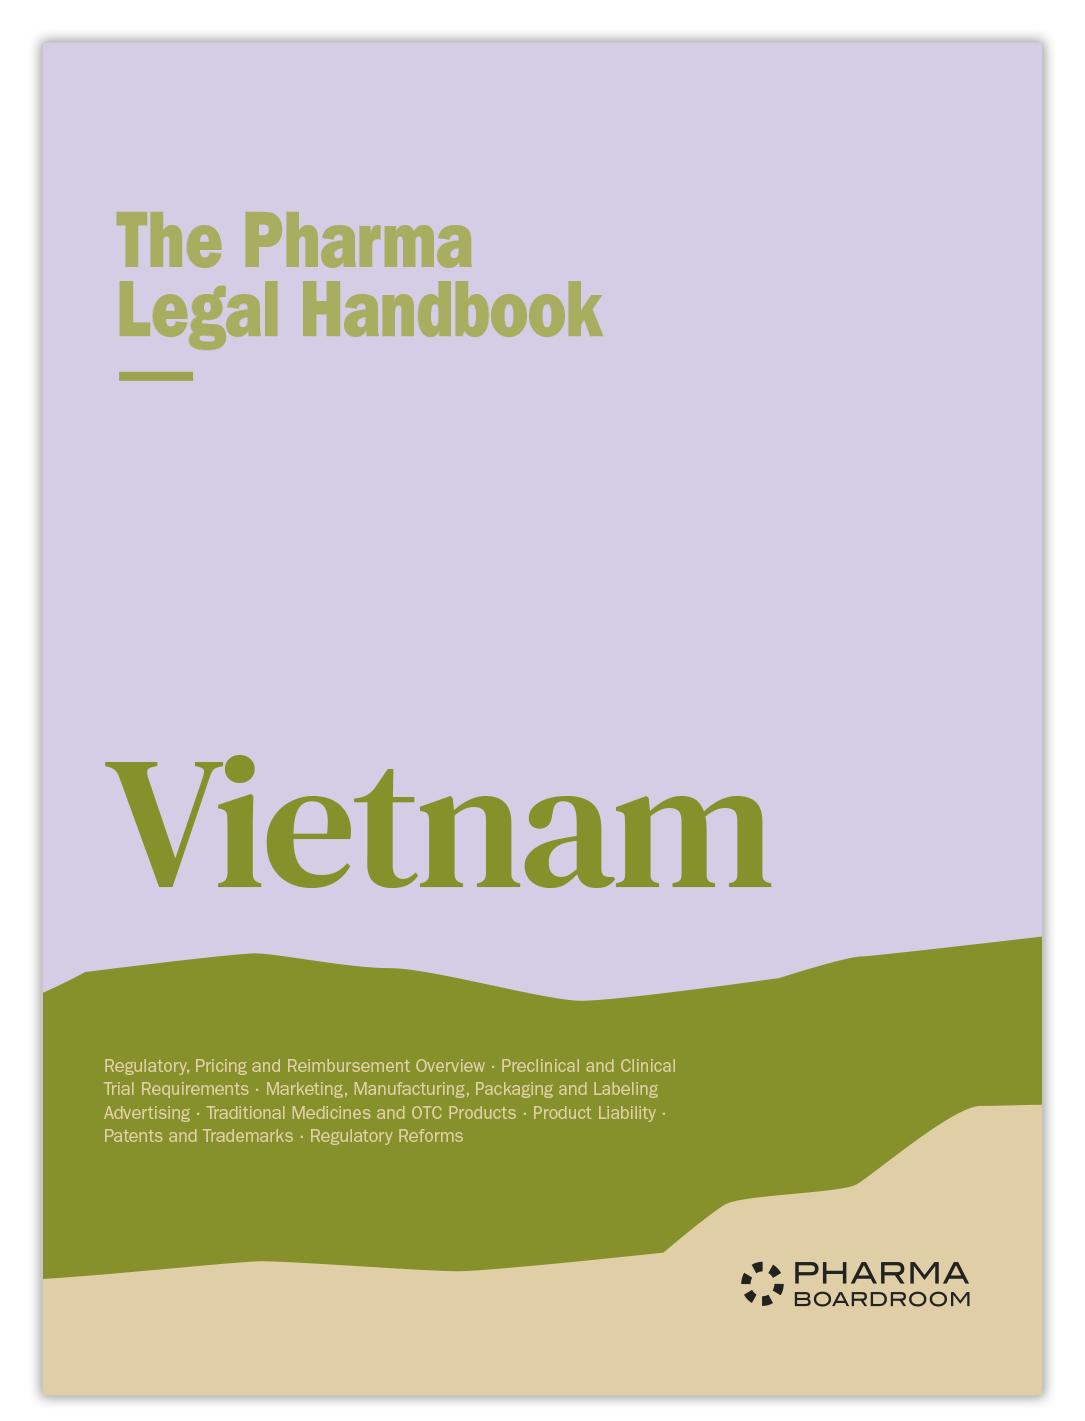 The Pharma Legal Handbook: Vietnam